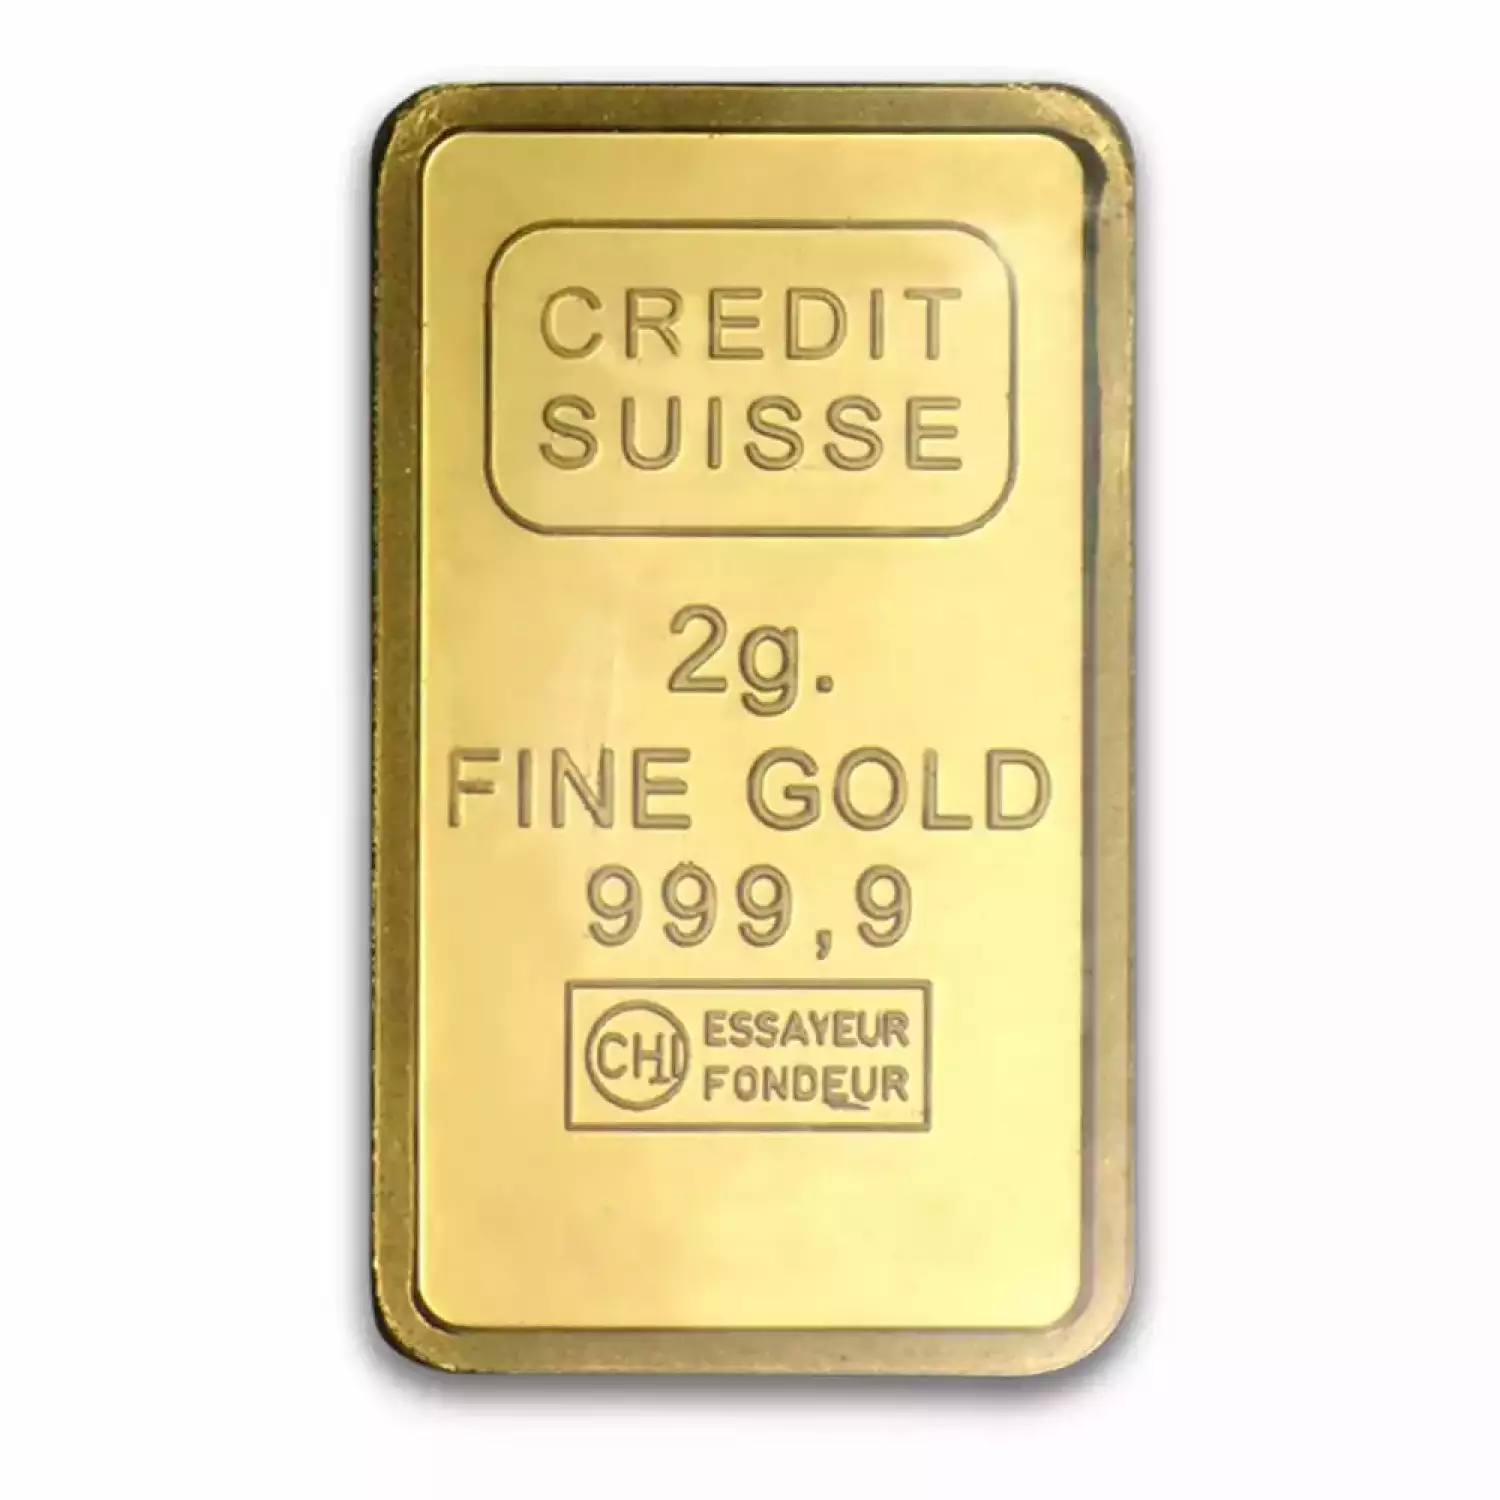 2 g Credit Suisse Gold Liberty Bar (2)